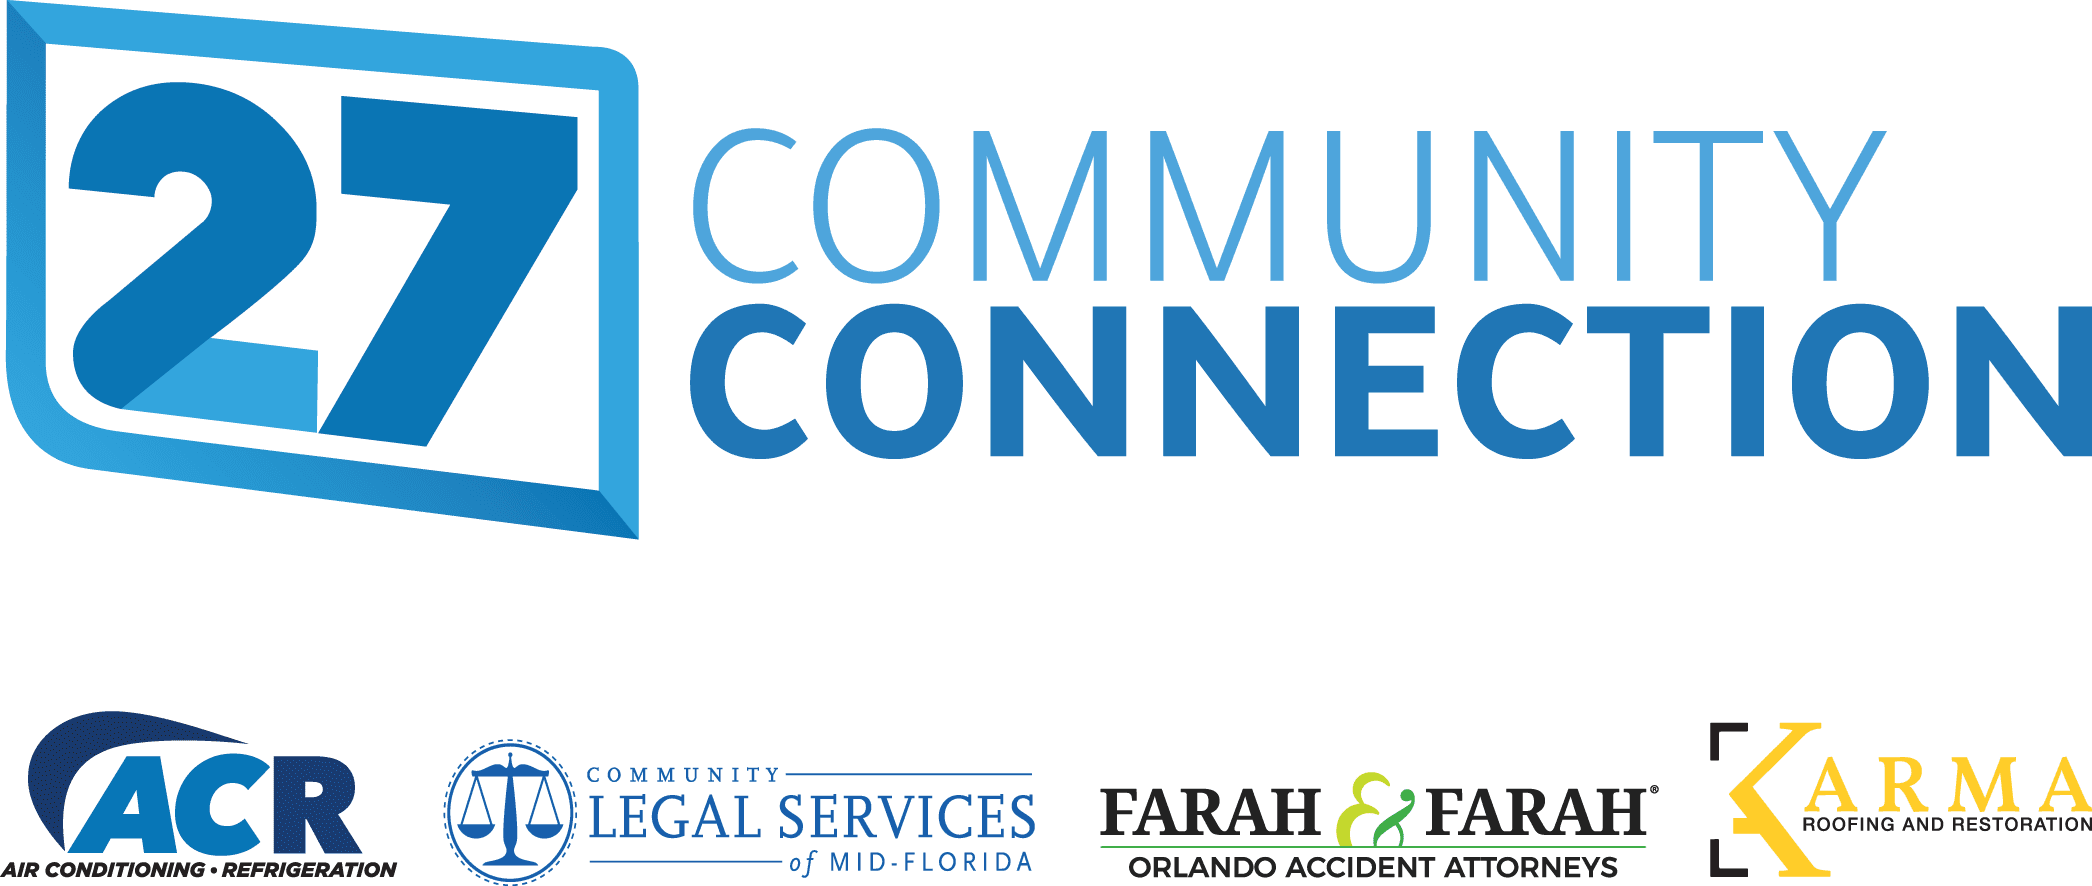 27 Community Connection logo